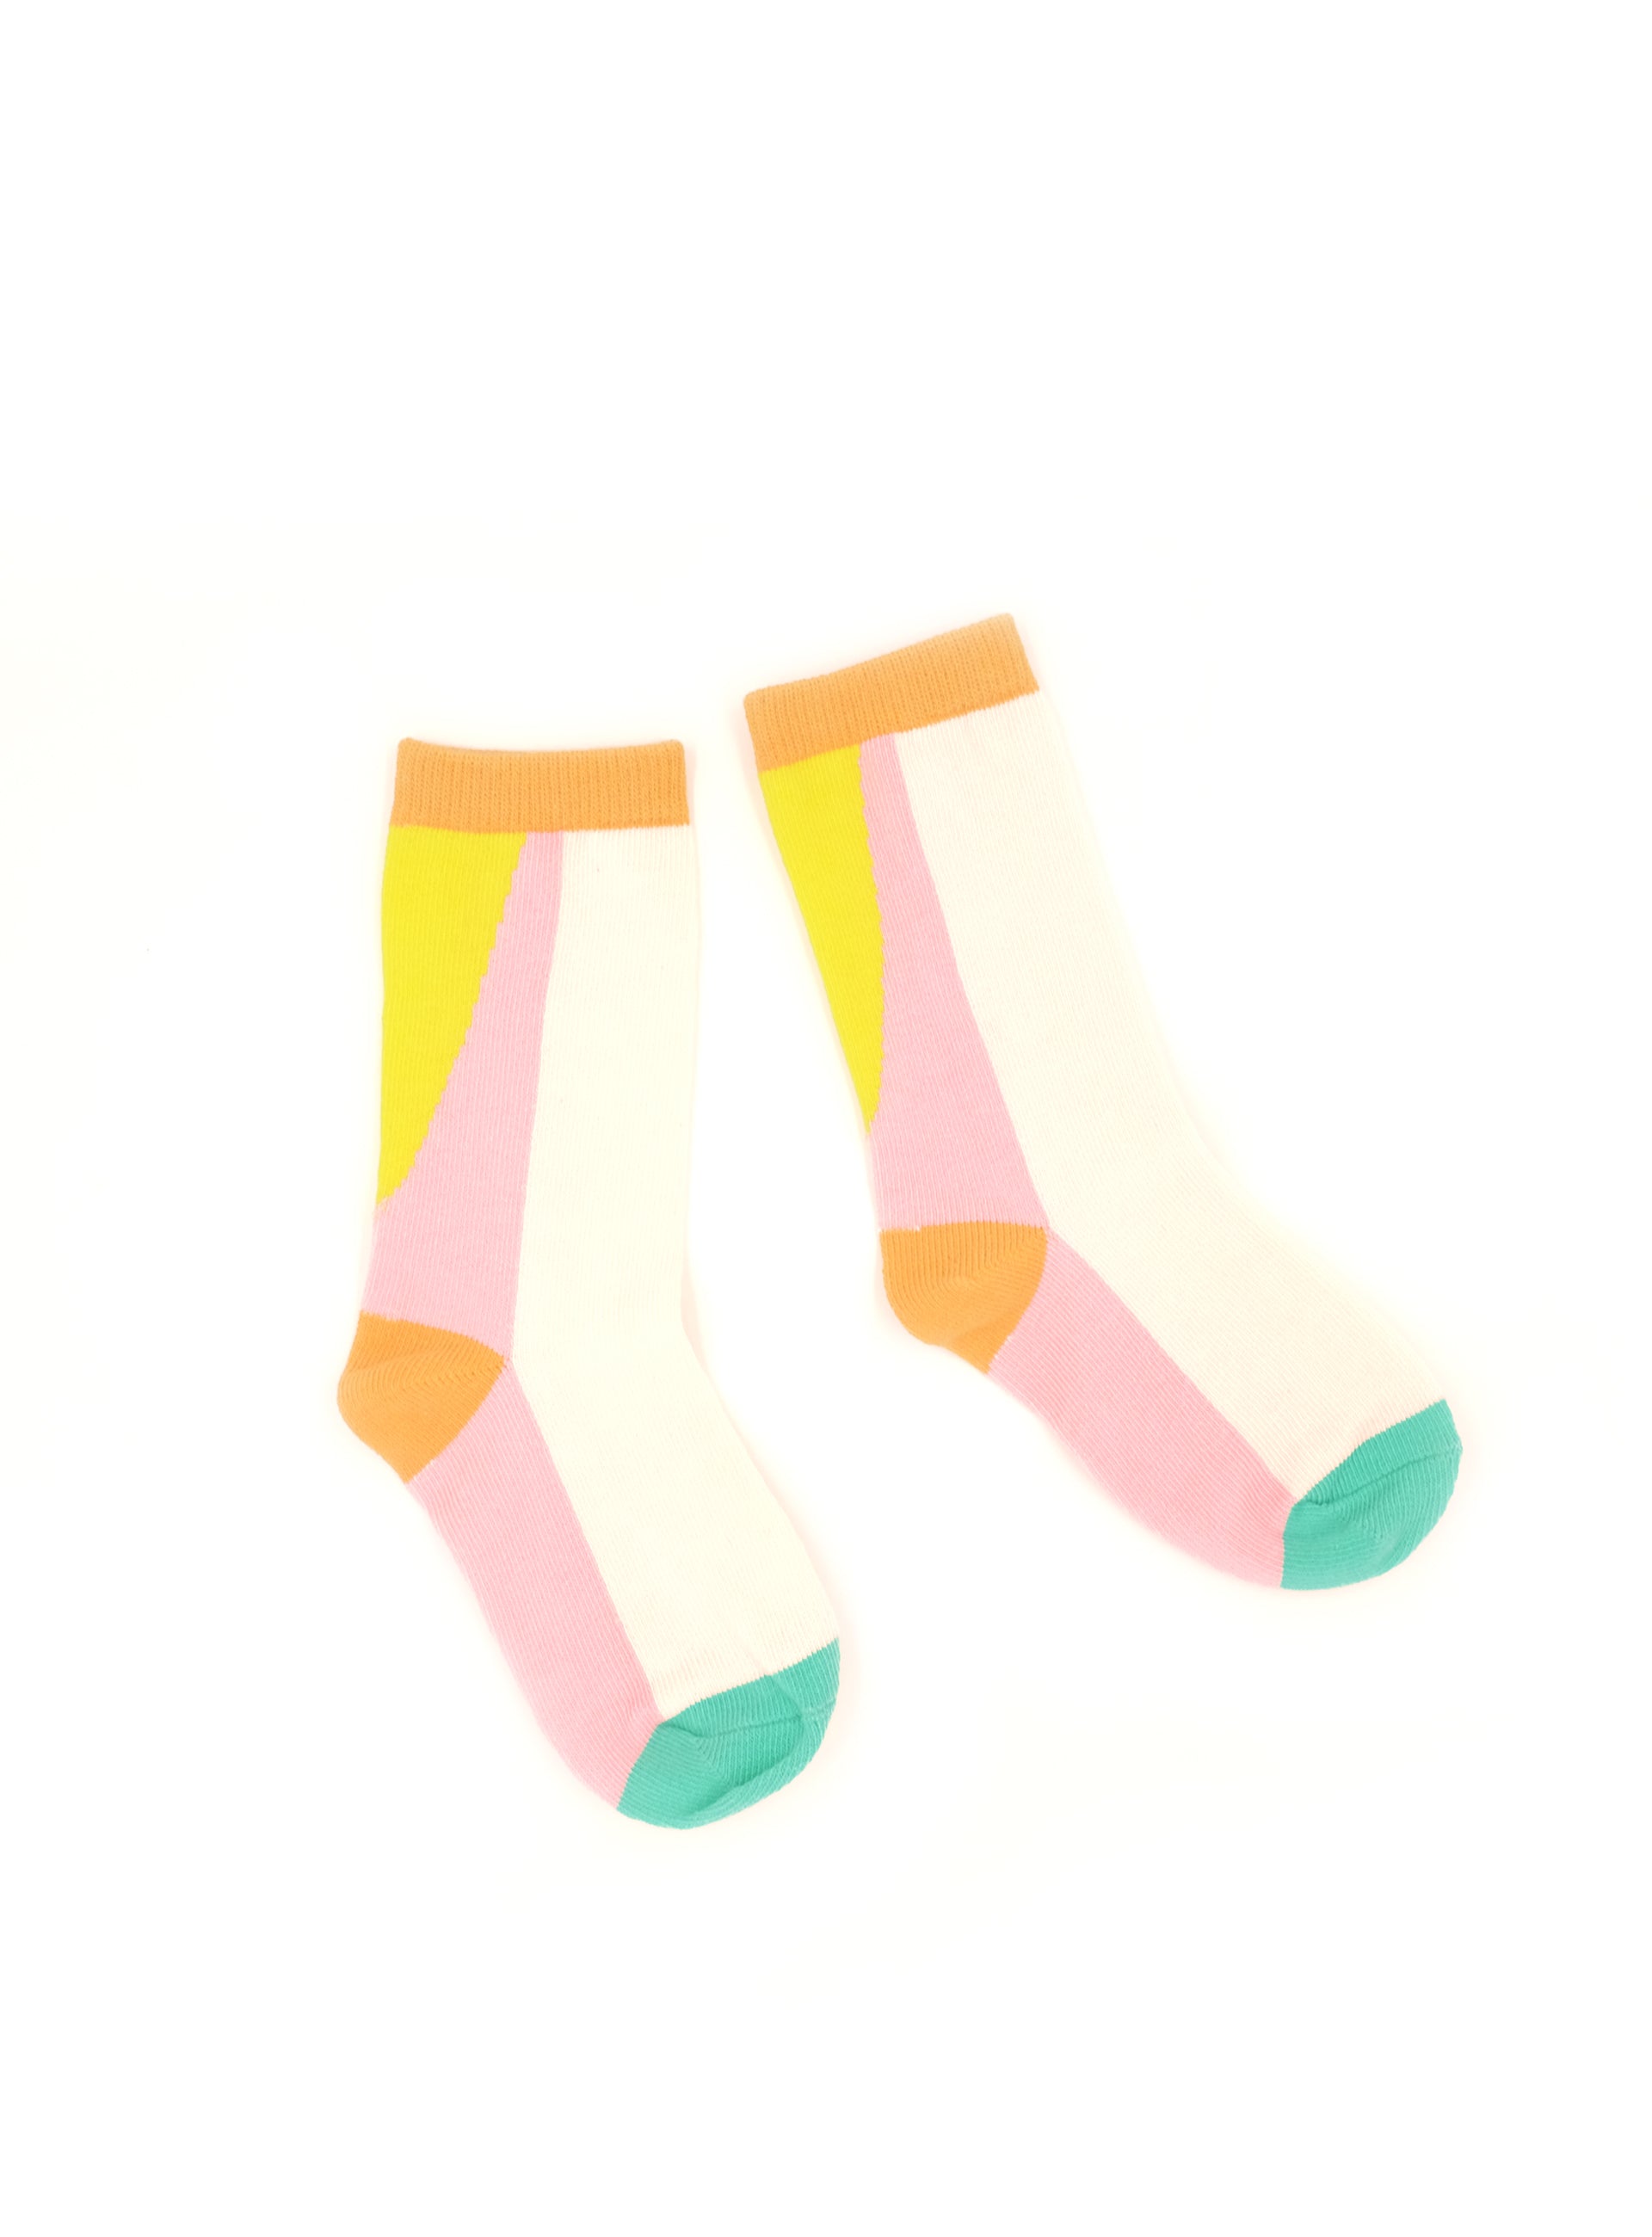 geometric bright pastel socks